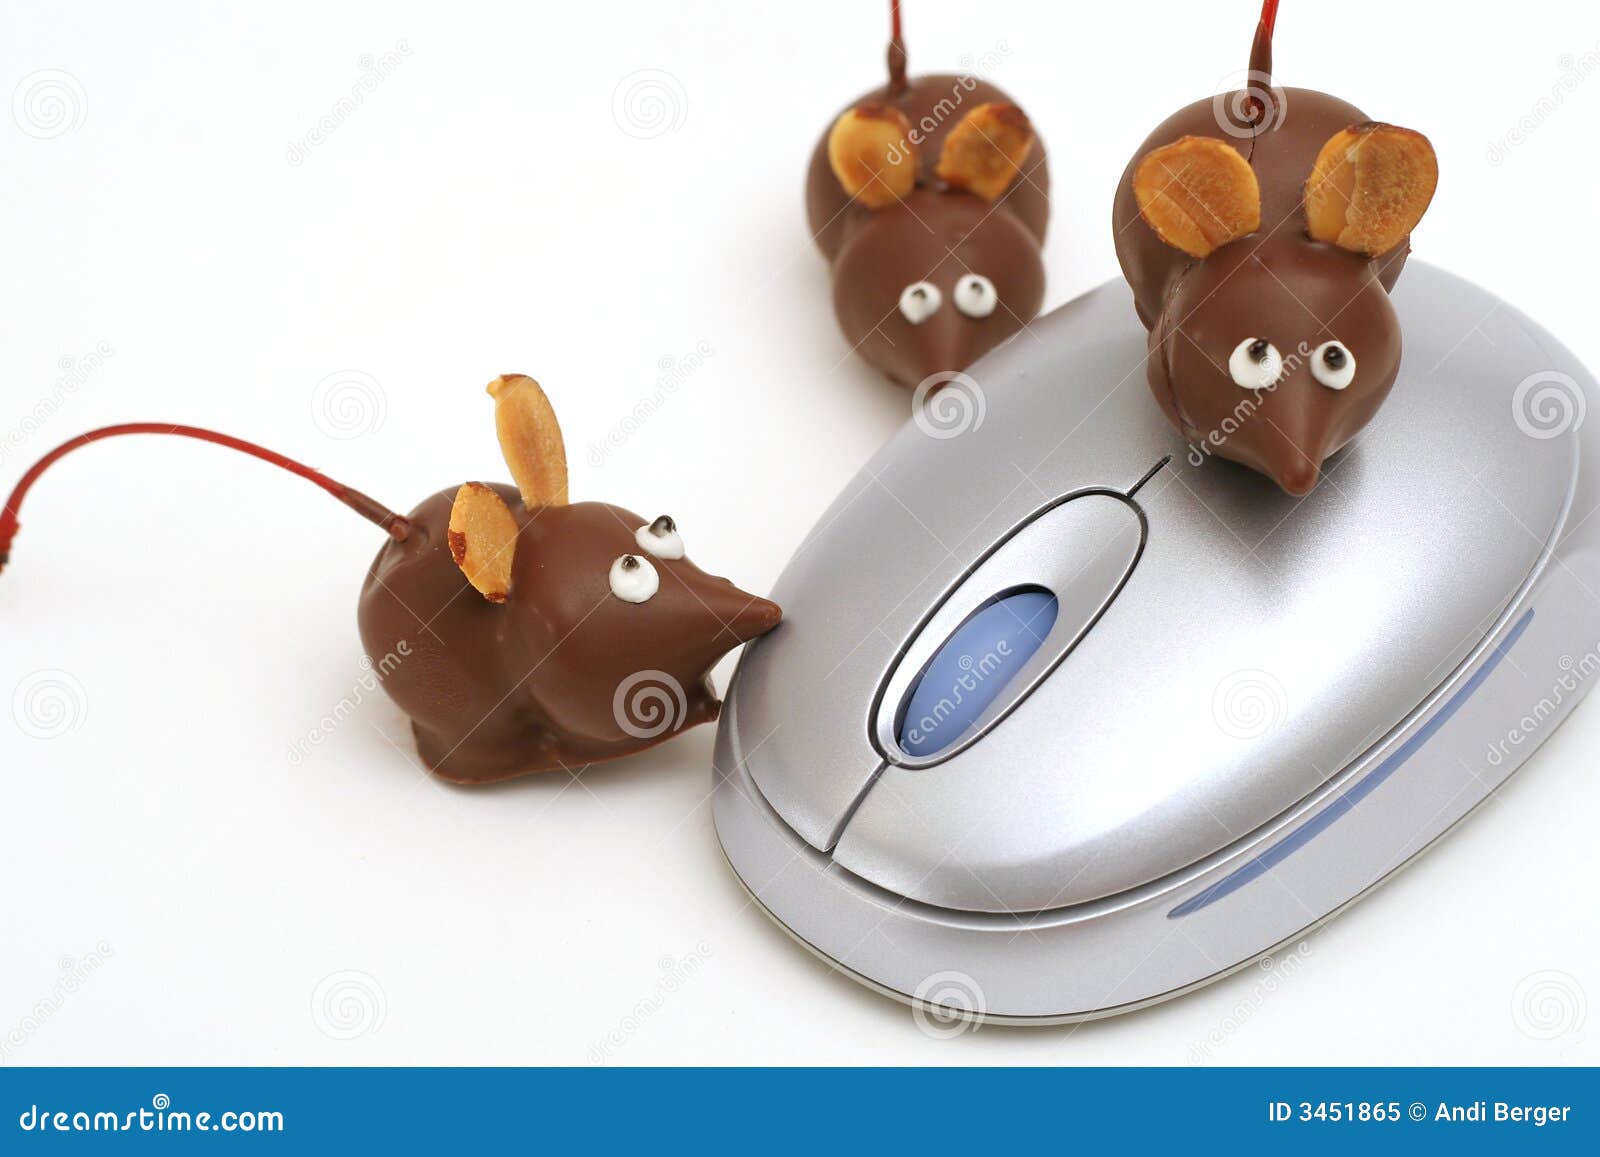 Включи 3 мыши. Шоколадная мышка. Мышь из шоколада. Мышь в шоколаде. Мышка с шоколадкой.